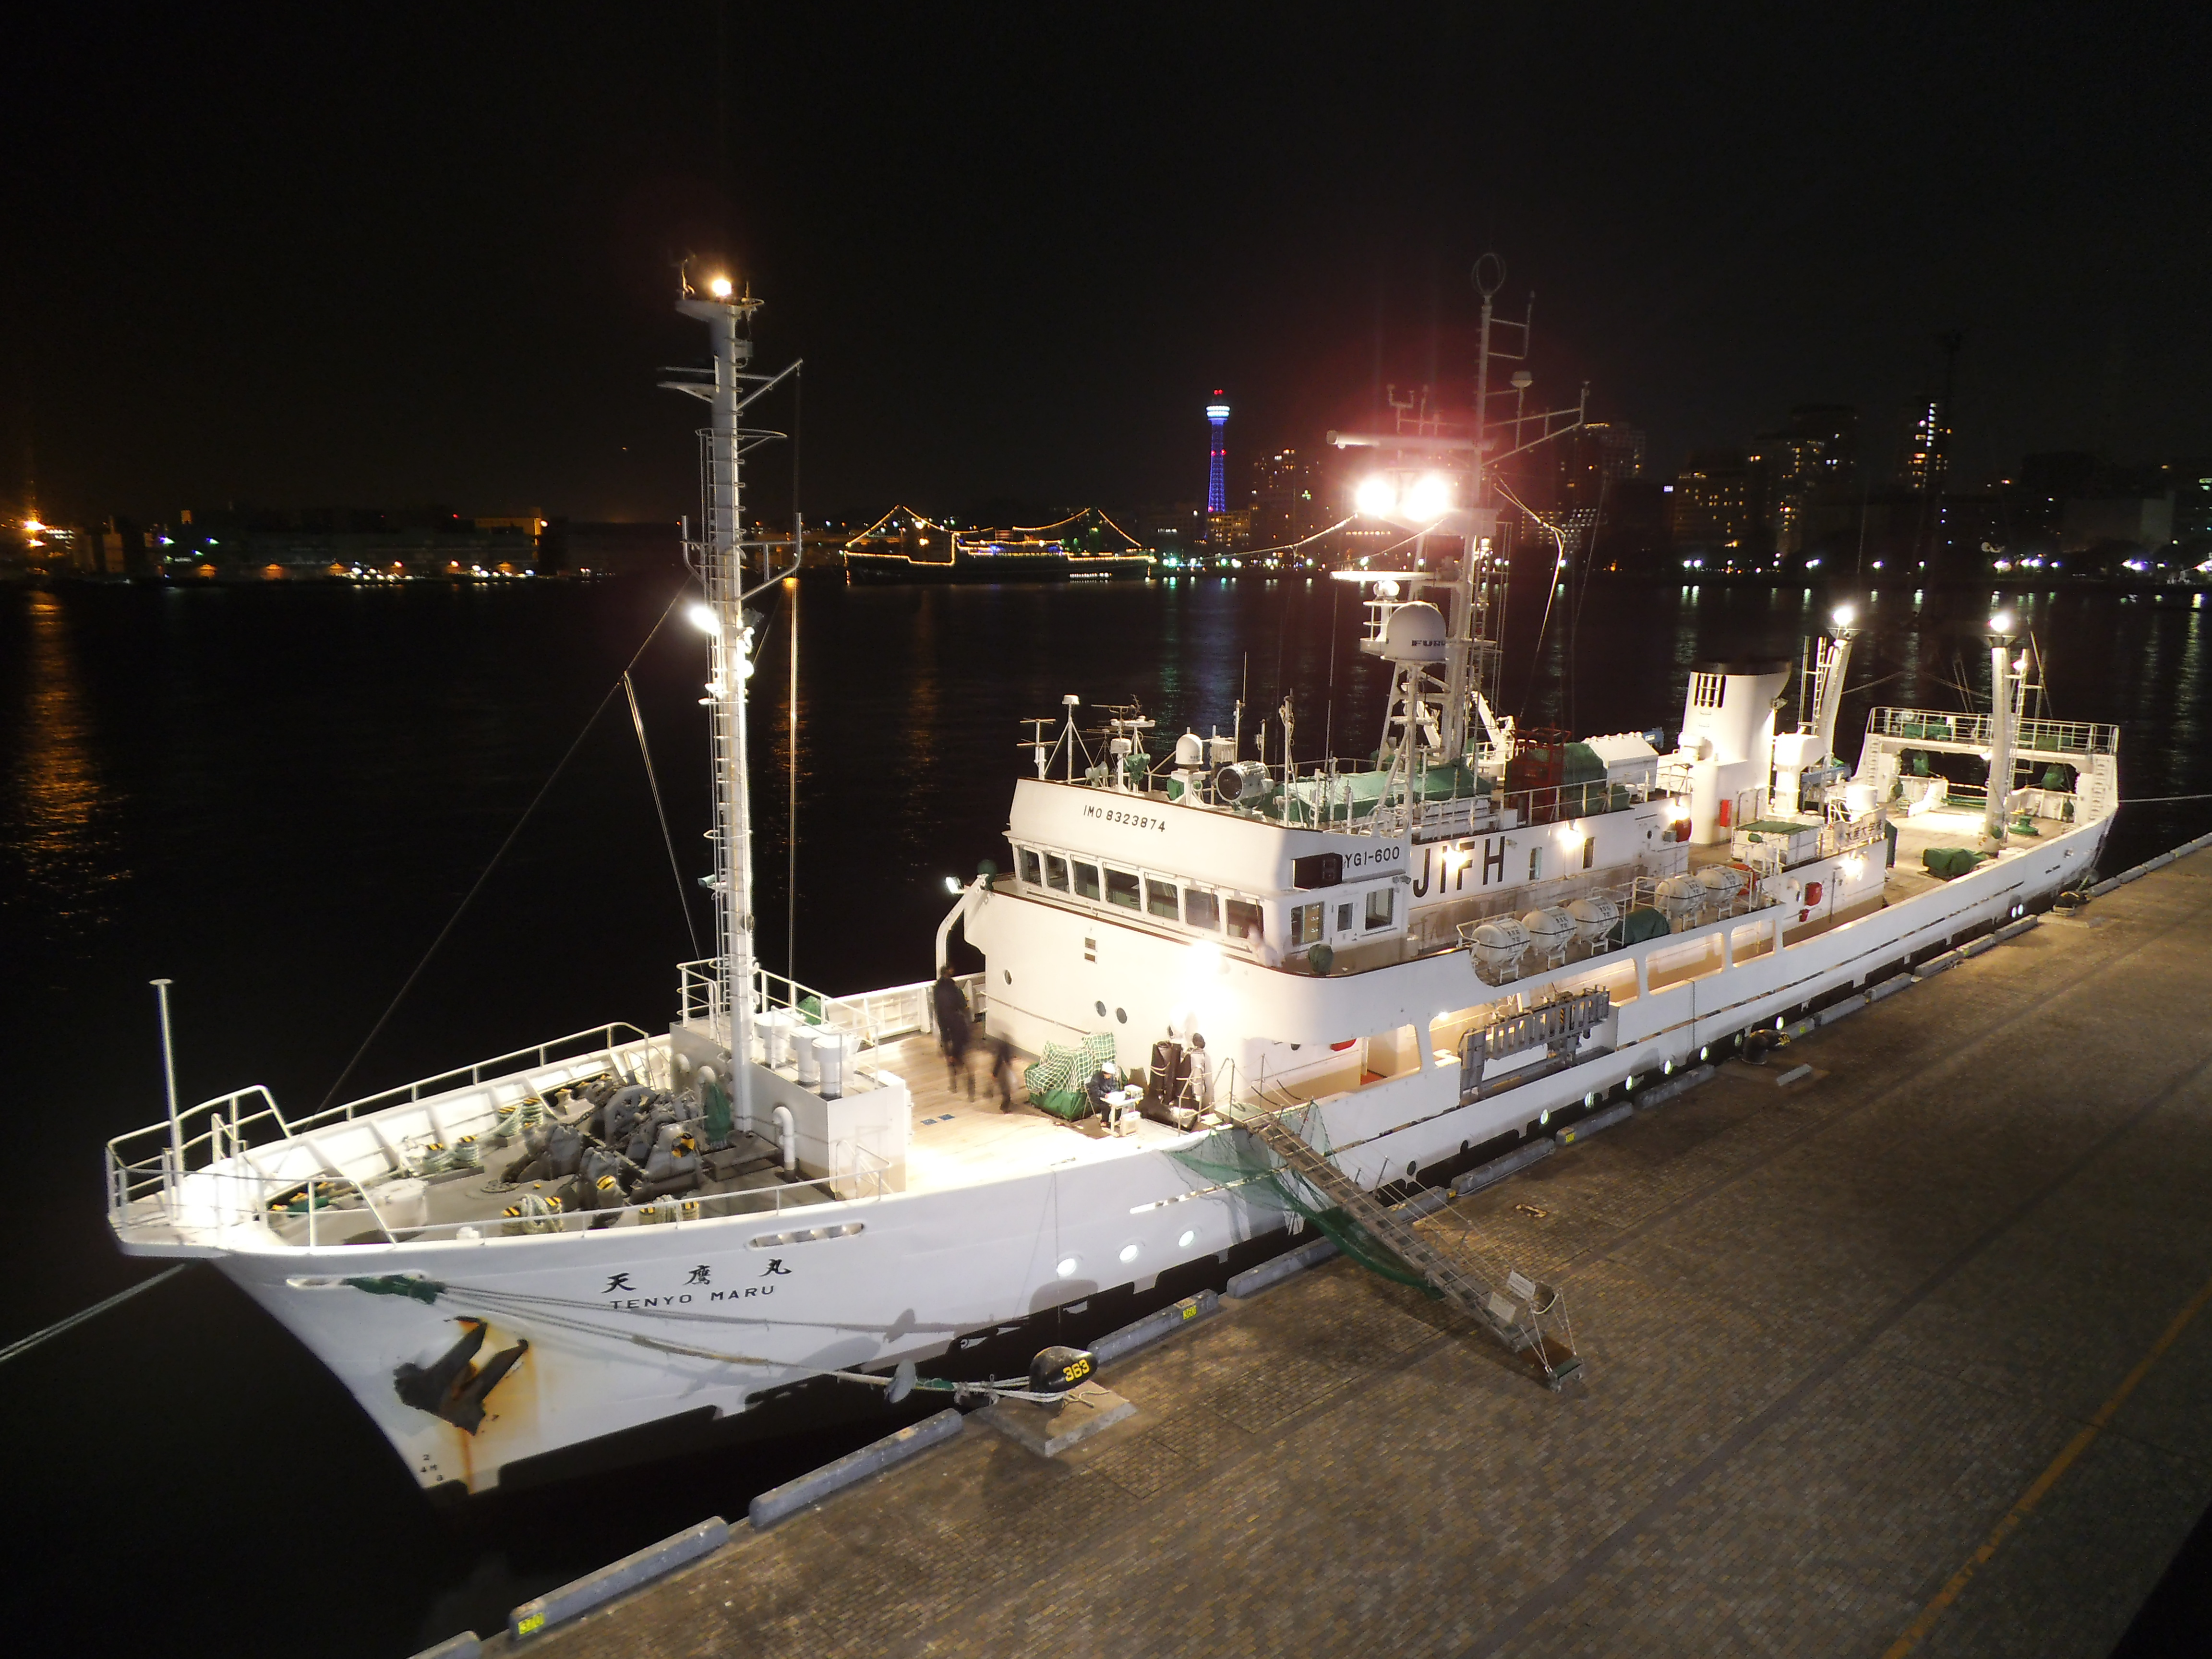 File Tenyomaru3 A Fishery Research And Training Vessel Of National Fisheries University At Port Of Yokohama At Night Jpg Wikimedia Commons